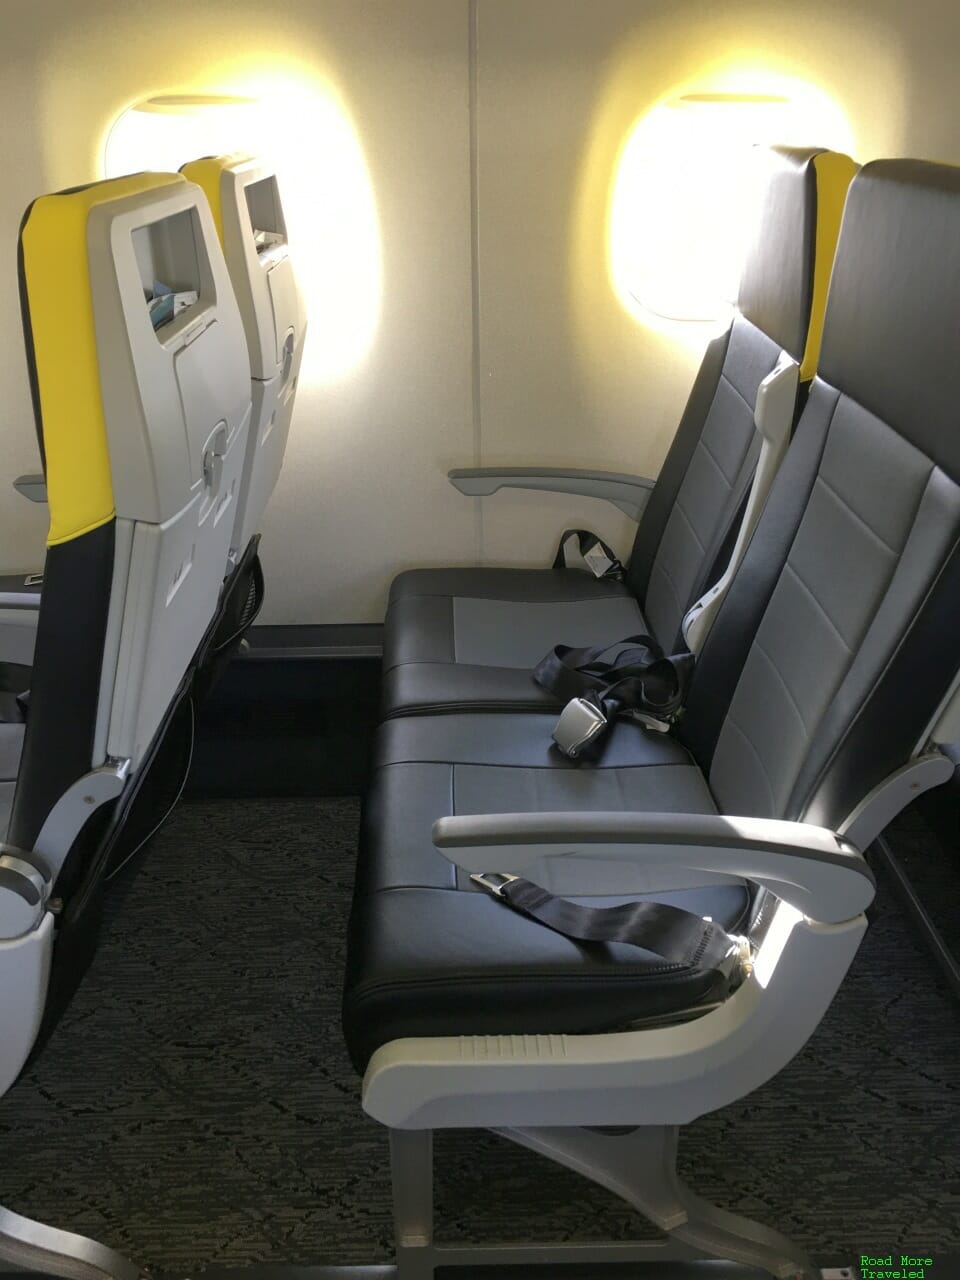 Breeze Airways Nice Class seat row